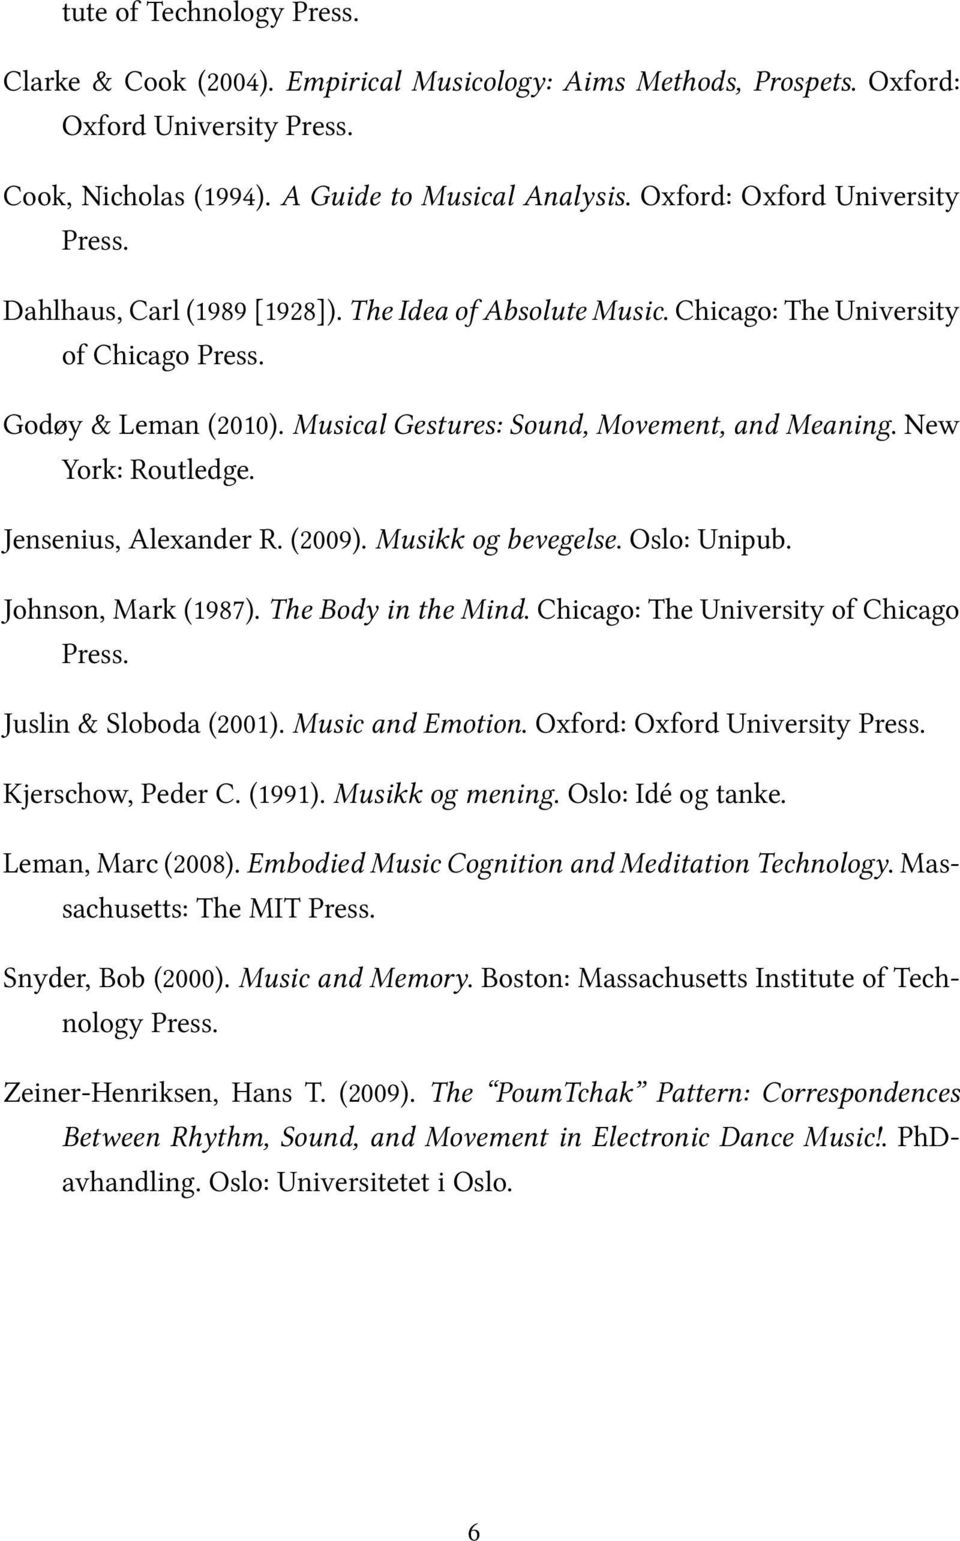 Musical Gestures: Sound, Movement, and Meaning. New York: Routledge. Jensenius, Alexander R. (2009). Musikk og bevegelse. Oslo: Unipub. Johnson, Mark (1987). The Body in the Mind.